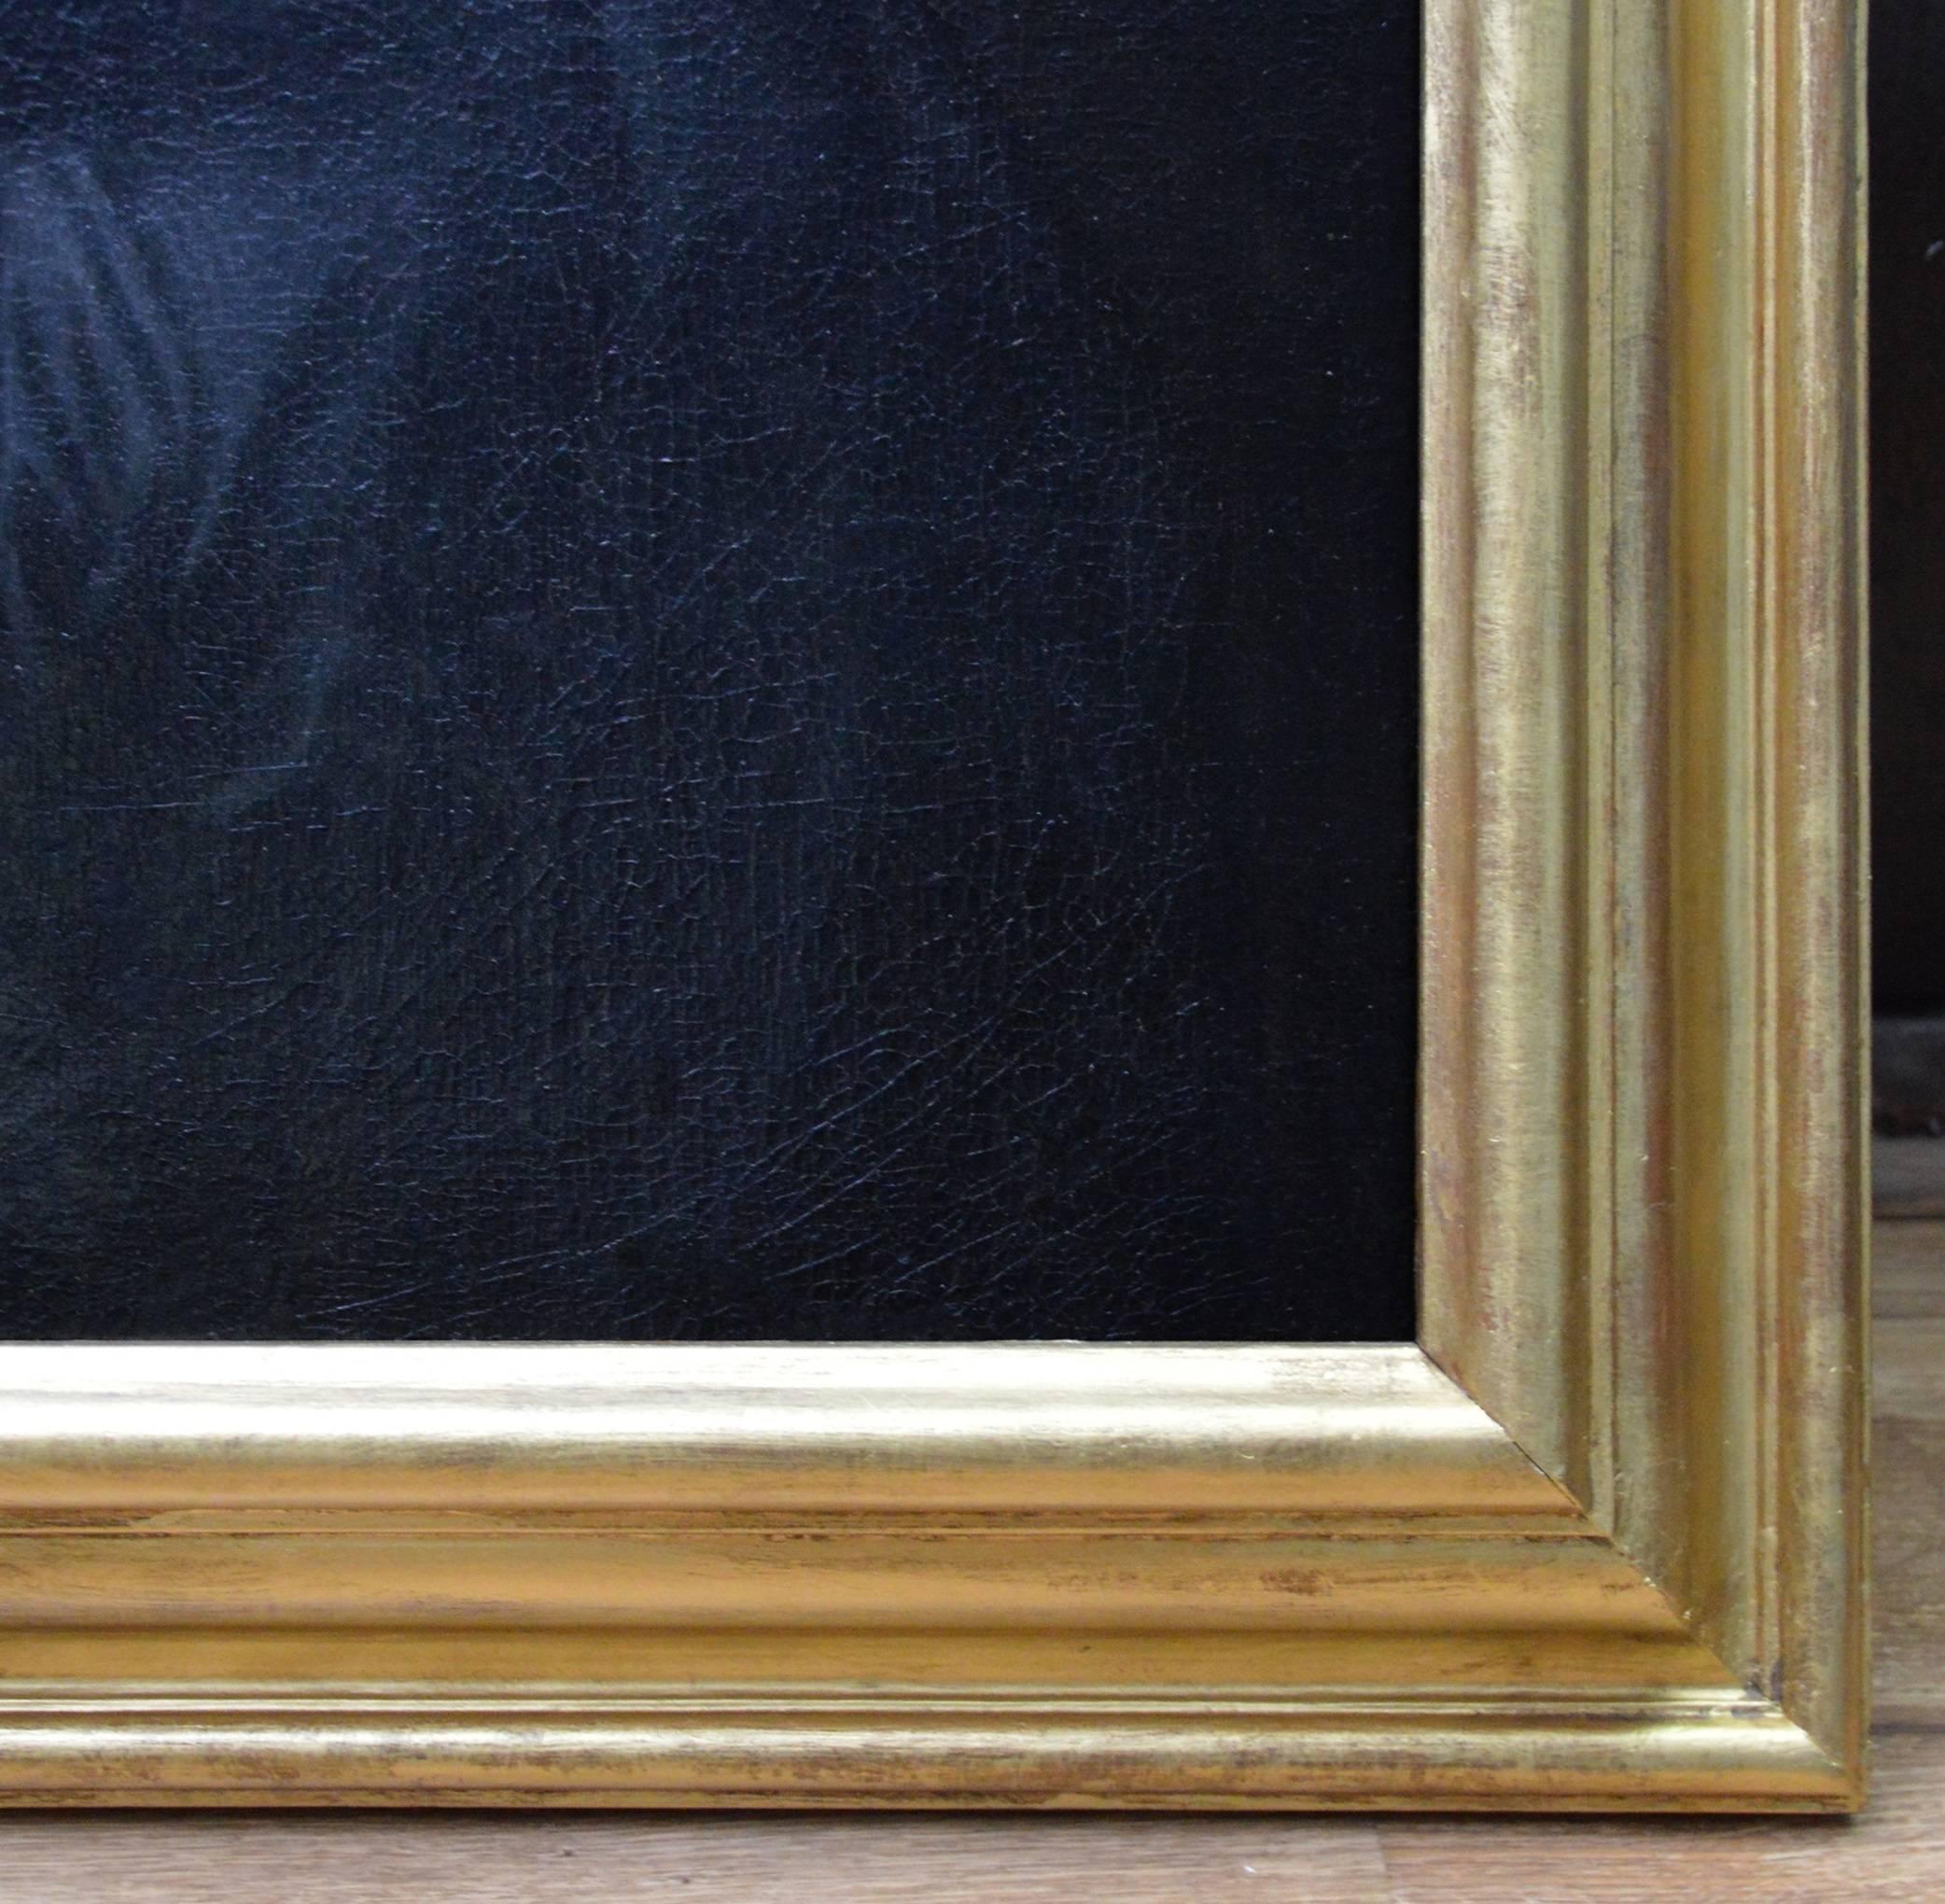 studio of Sir Anthony van Dyck - Self Portrait - Black Portrait Painting by Anthony Van Dyck